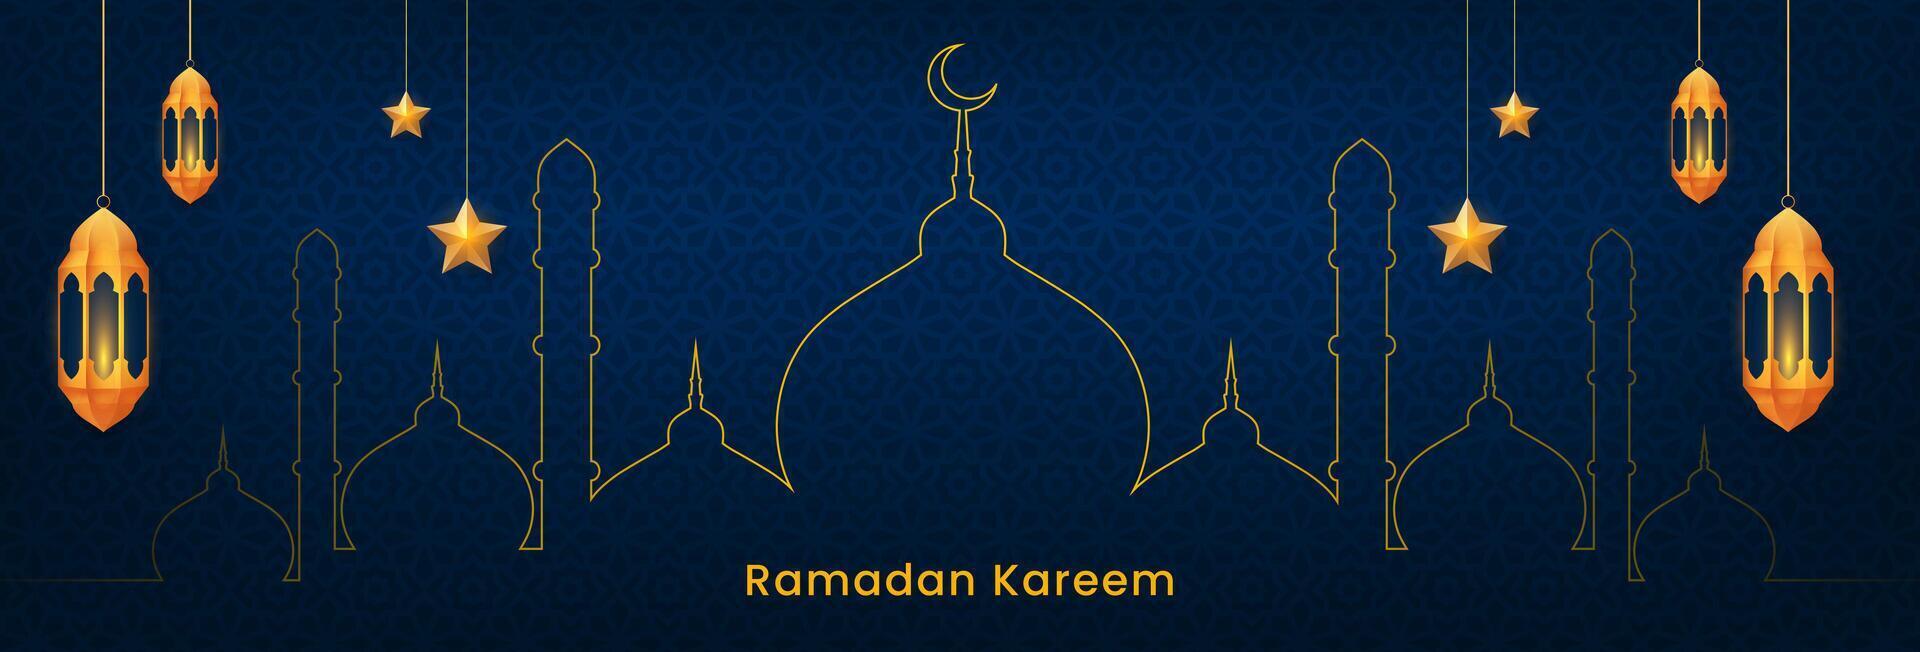 Ramadan Kareem banner design. Islamic celebration background with golden lanterns, star ornaments Vector illustration